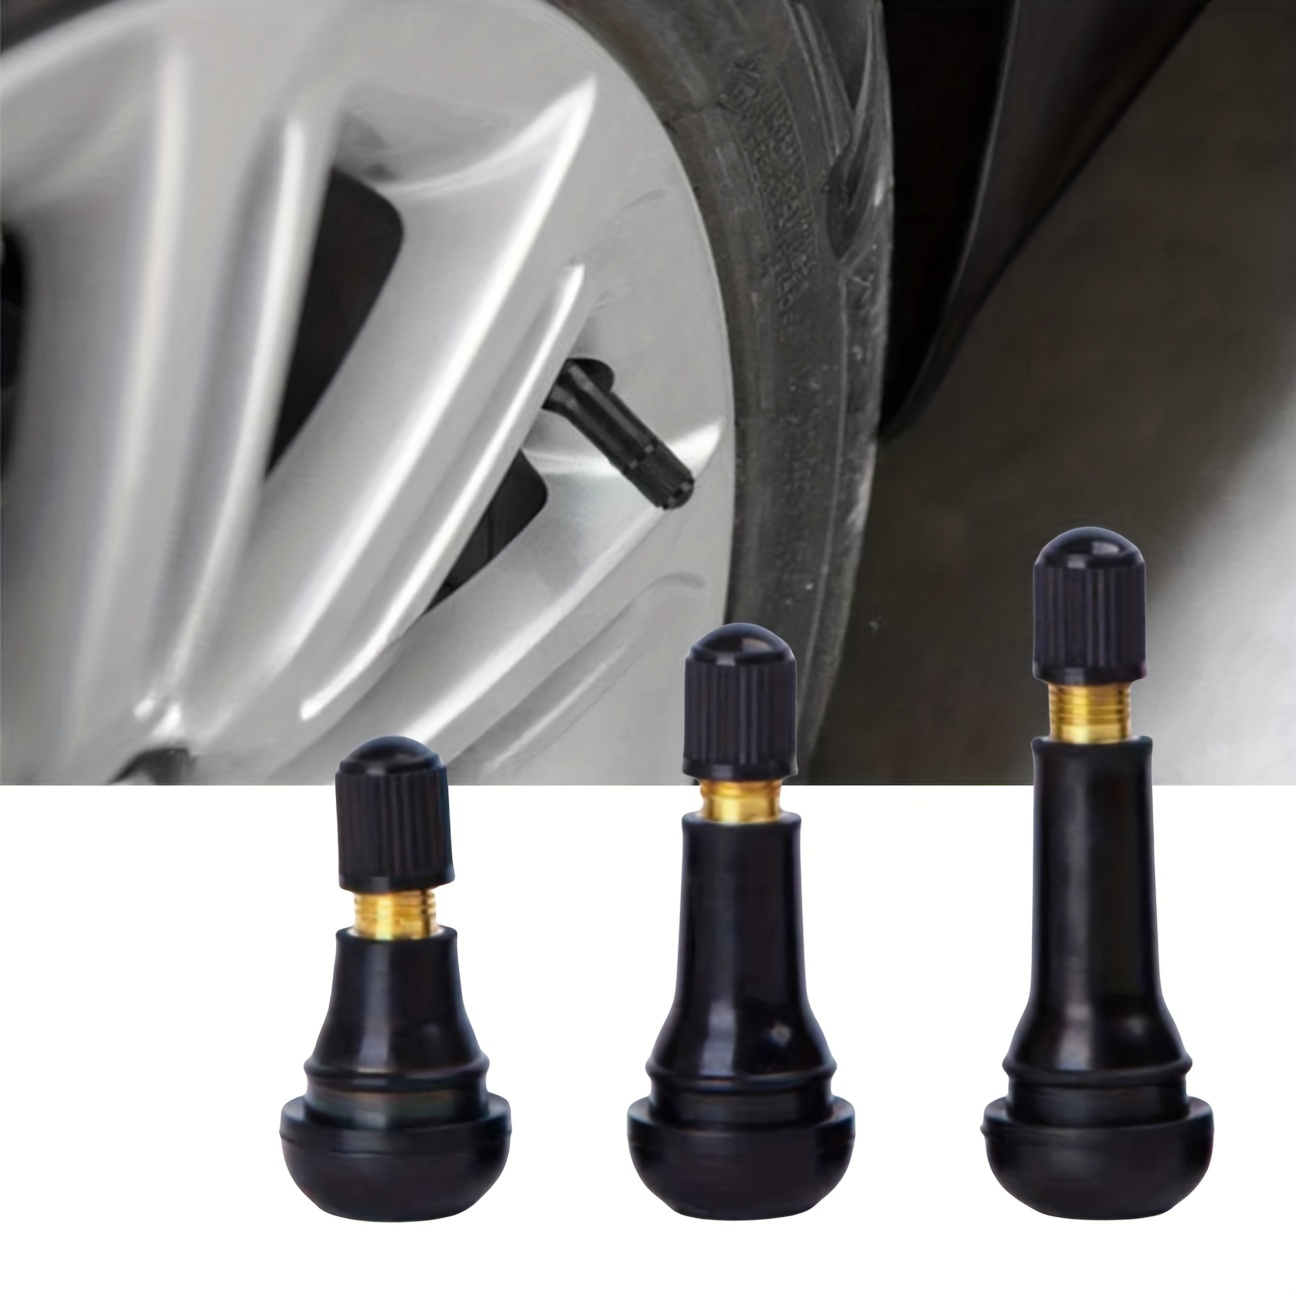 10pcs Car Tire Valve Stem Snap-in Tire Tyre Valve Stem Set With Dust Caps  For Tubeless Rim Holes Standard Vehicle Tires